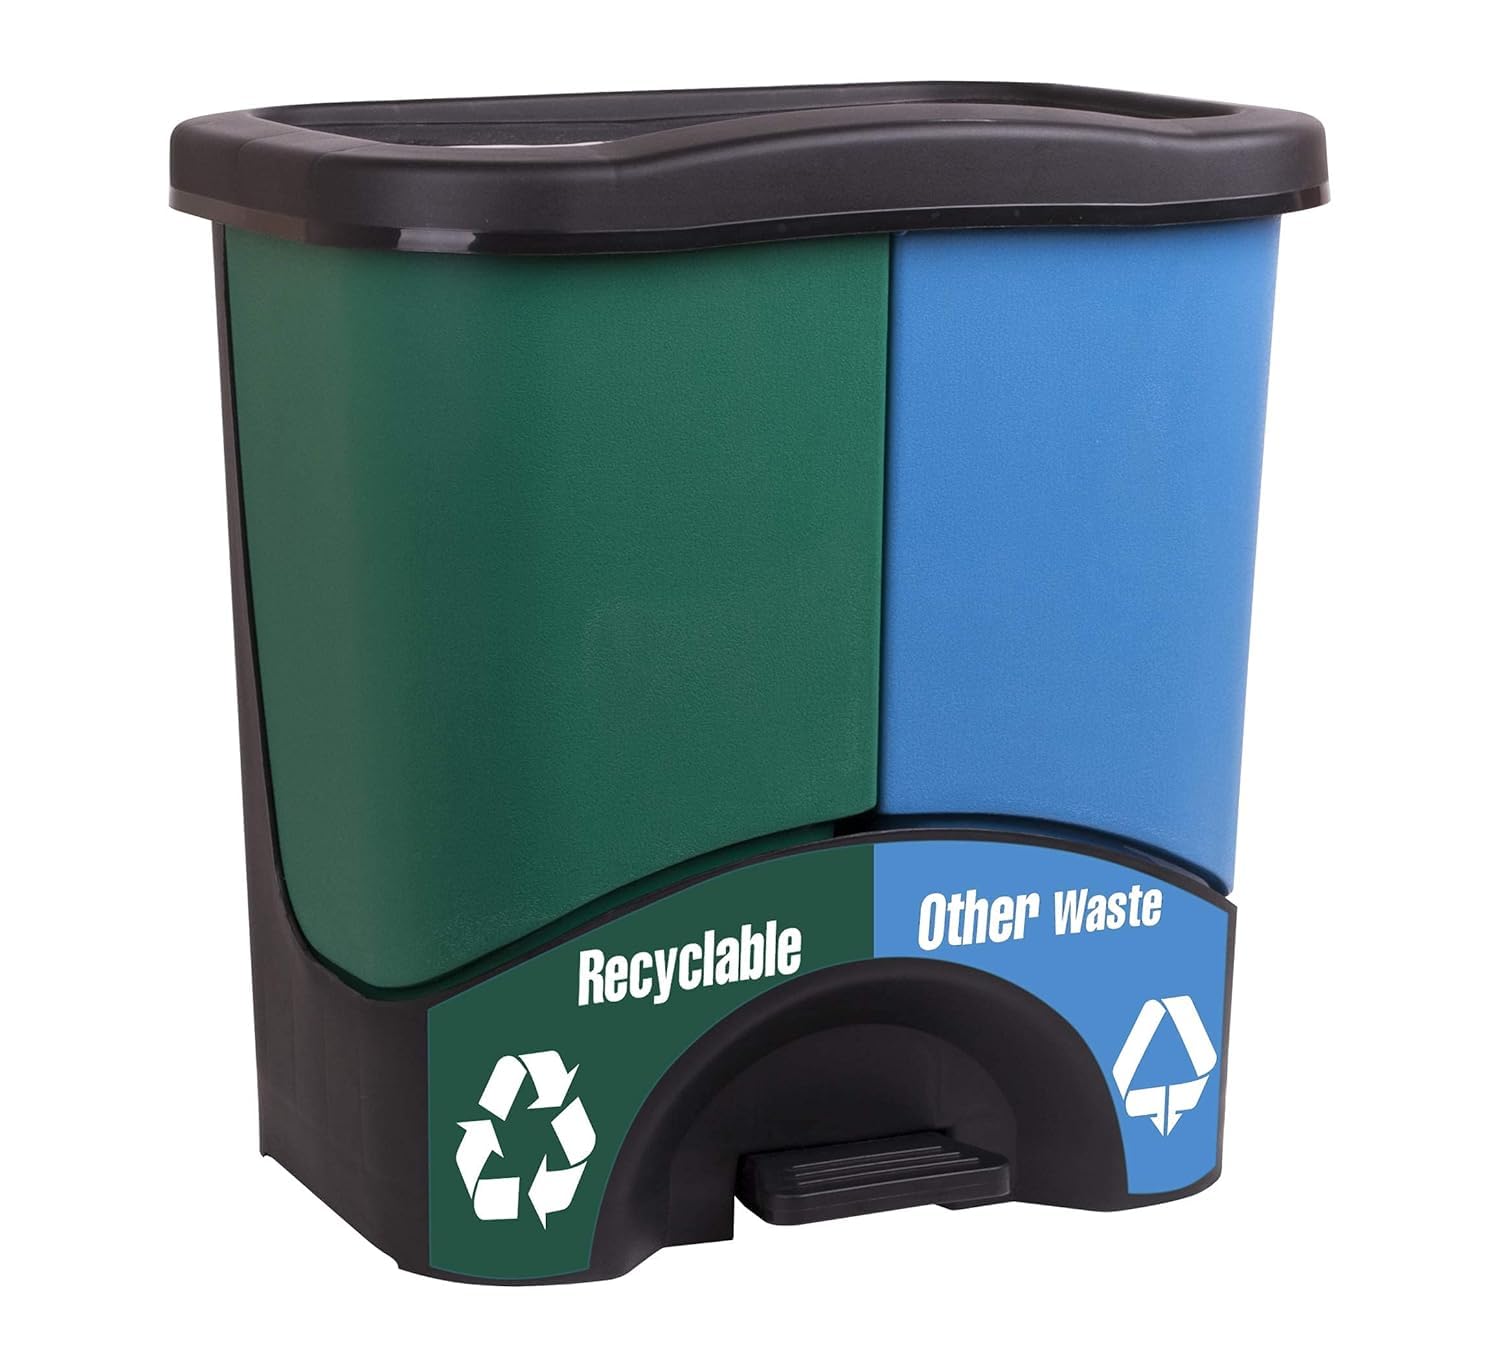 mintra home trash bins 175inw x 175inh x 13ind double bin greenblue recycle trash can bin garbage plastic wastebasket ad